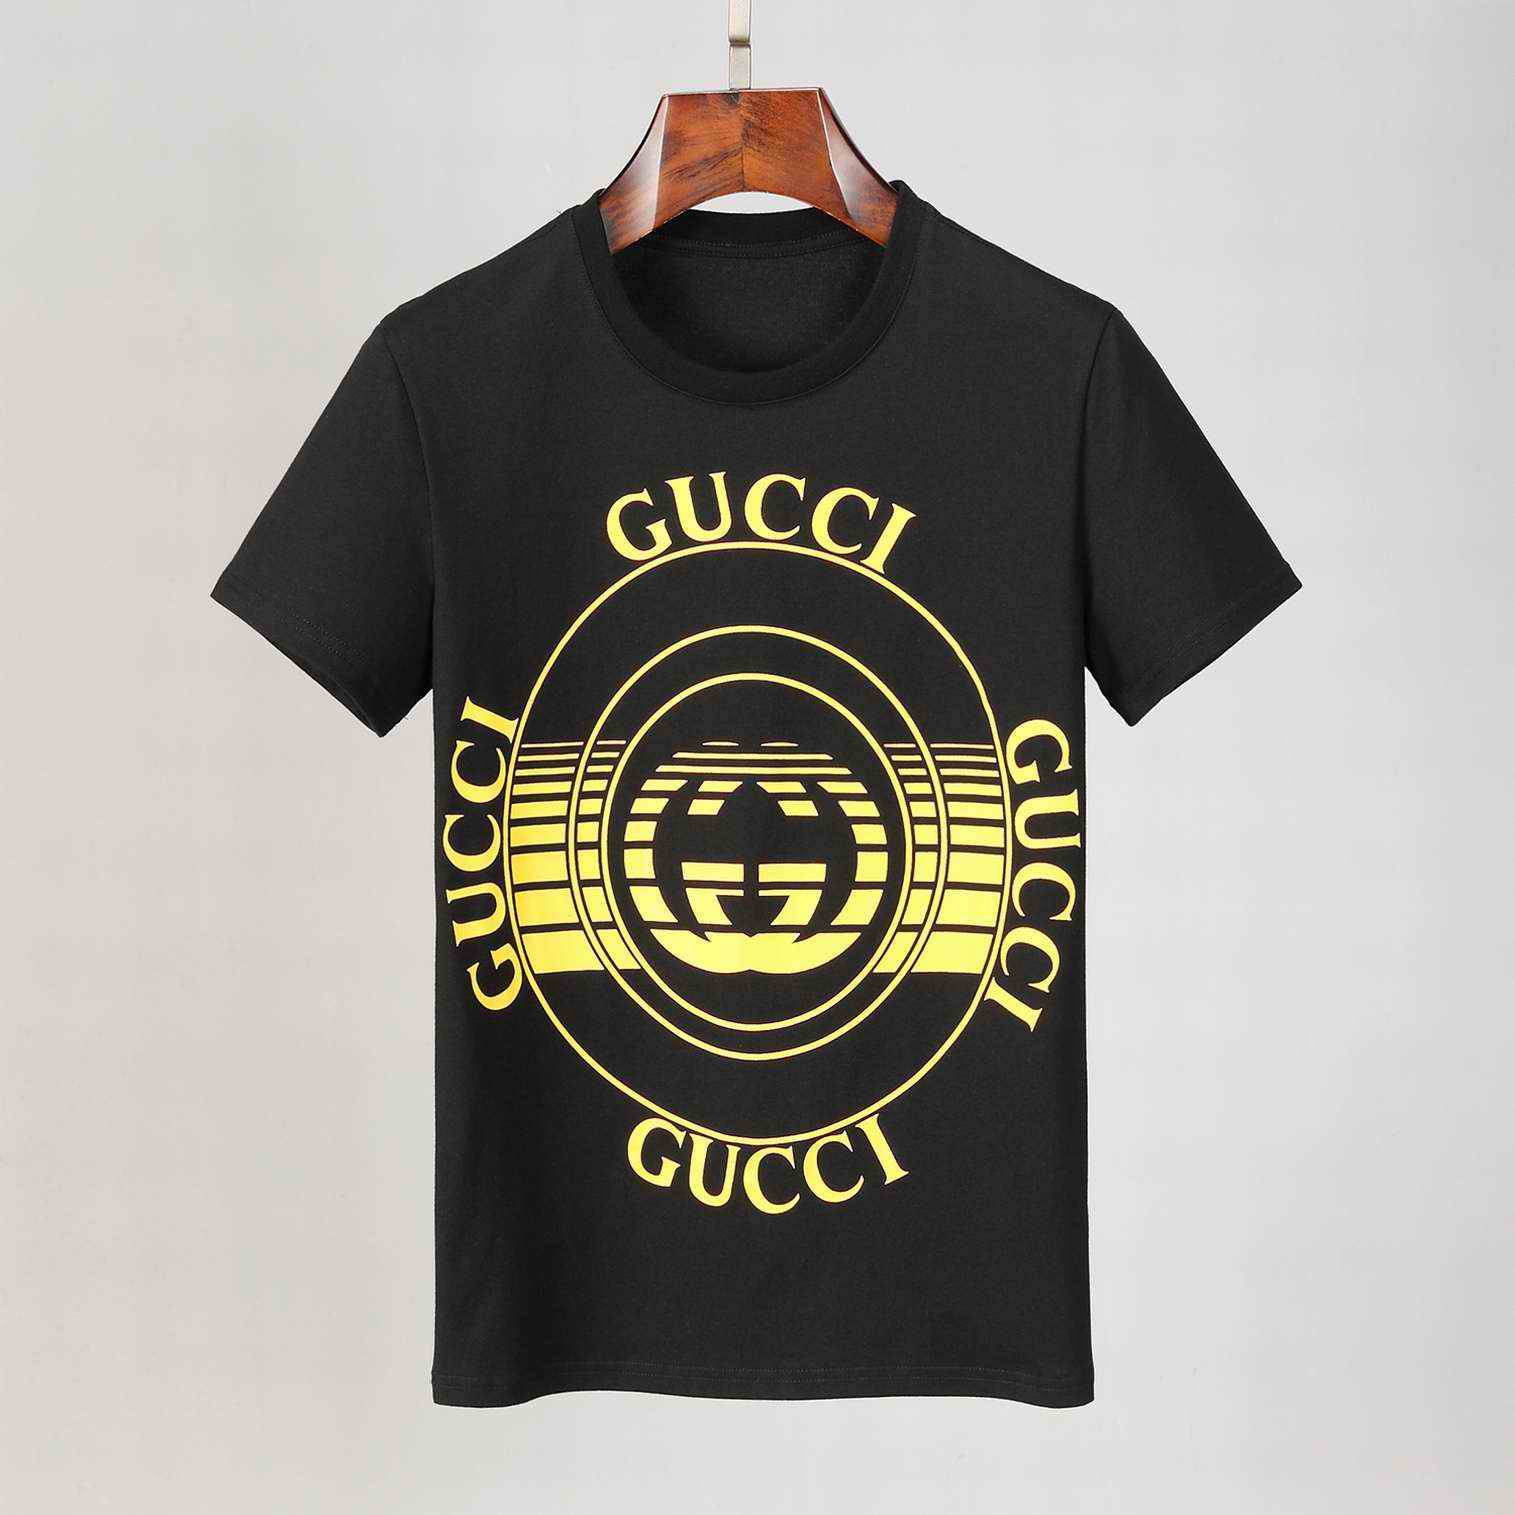  Gucci Shirts 006